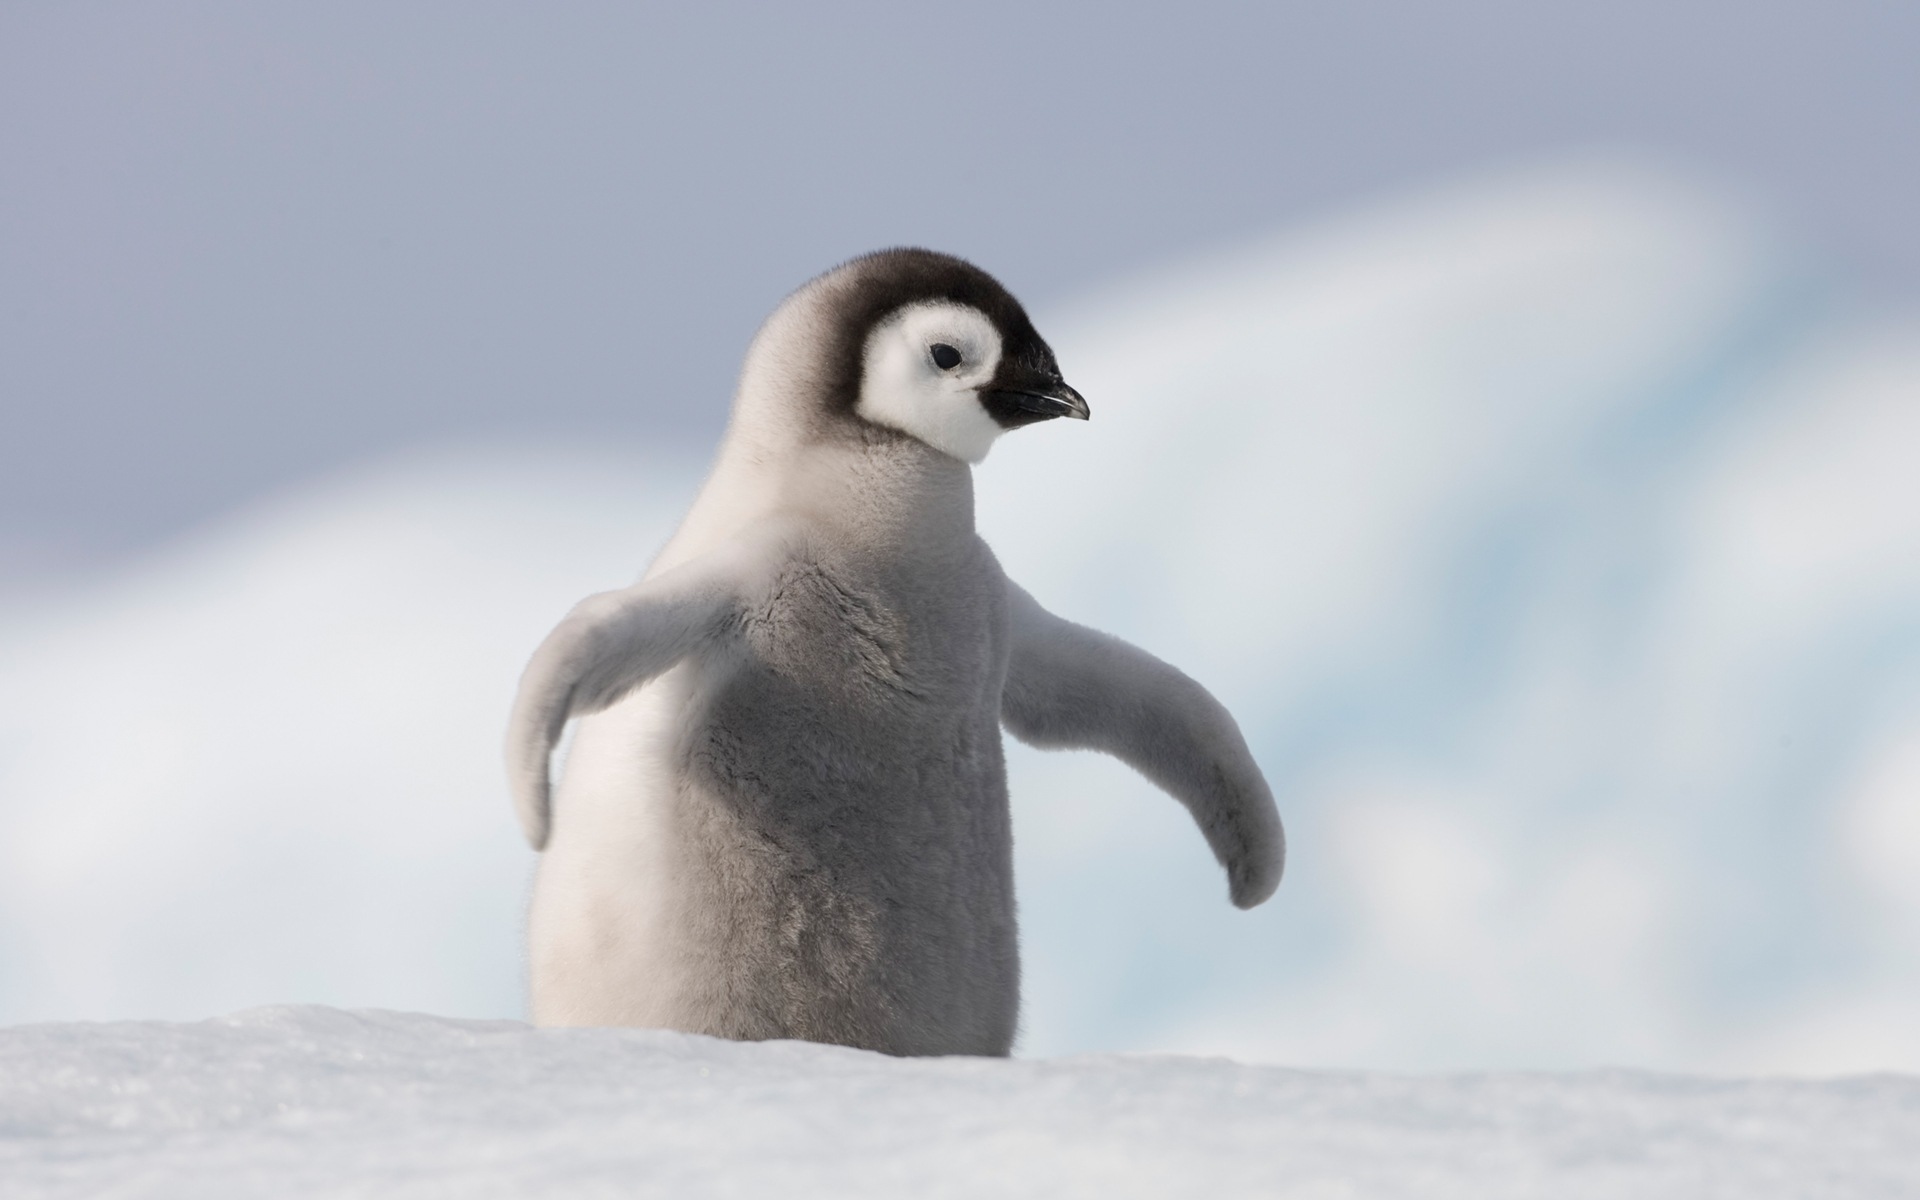 Windows 8 Wallpapers: Antarctic, Snow scenery, Antarctic penguins #8 - 1920x1200